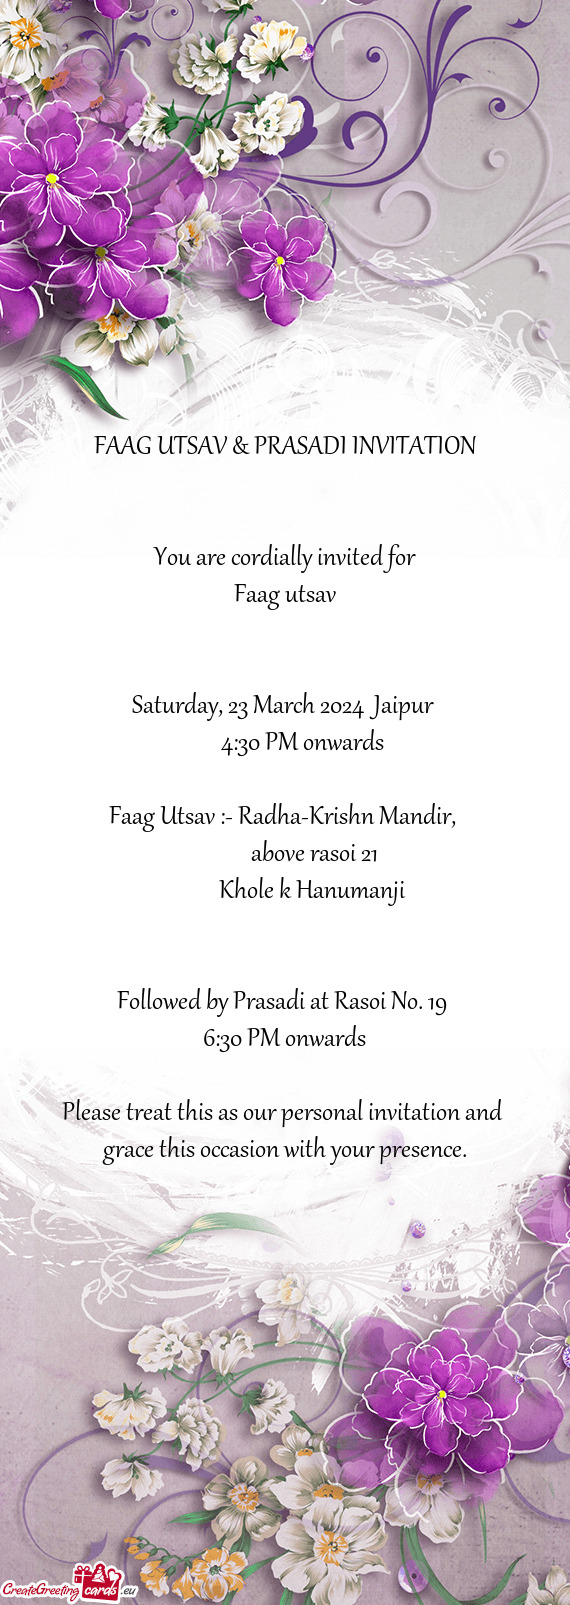 Saturday, 23 March 2024 Jaipur